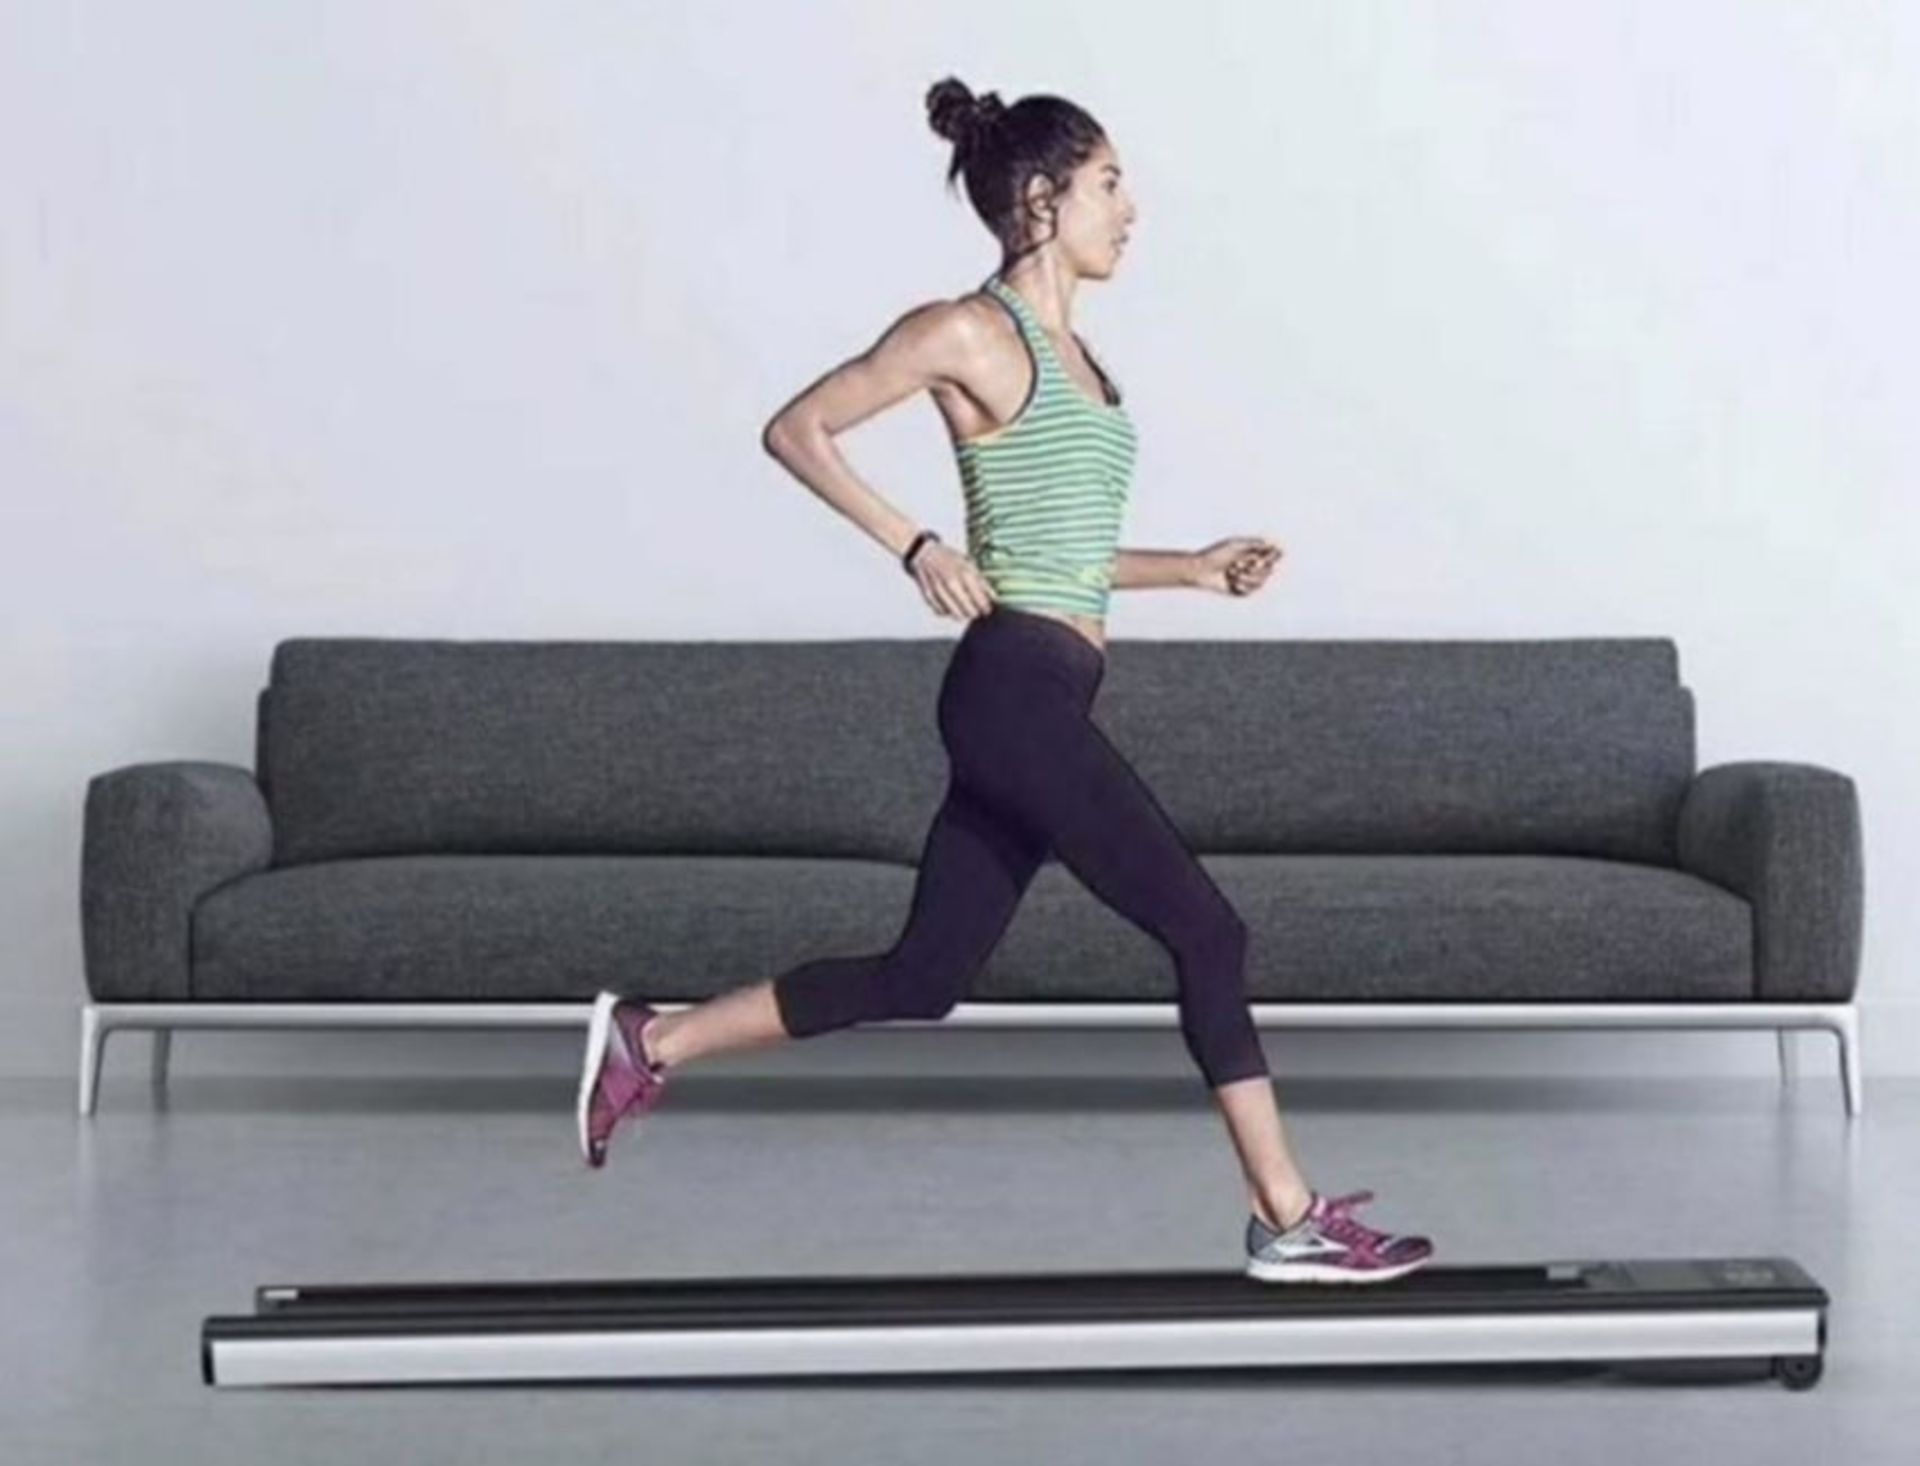 1 x Slim Tread Ultra Thin Smart Treadmill Running / Walking Machine - Lightweight With Folding - Image 9 of 10